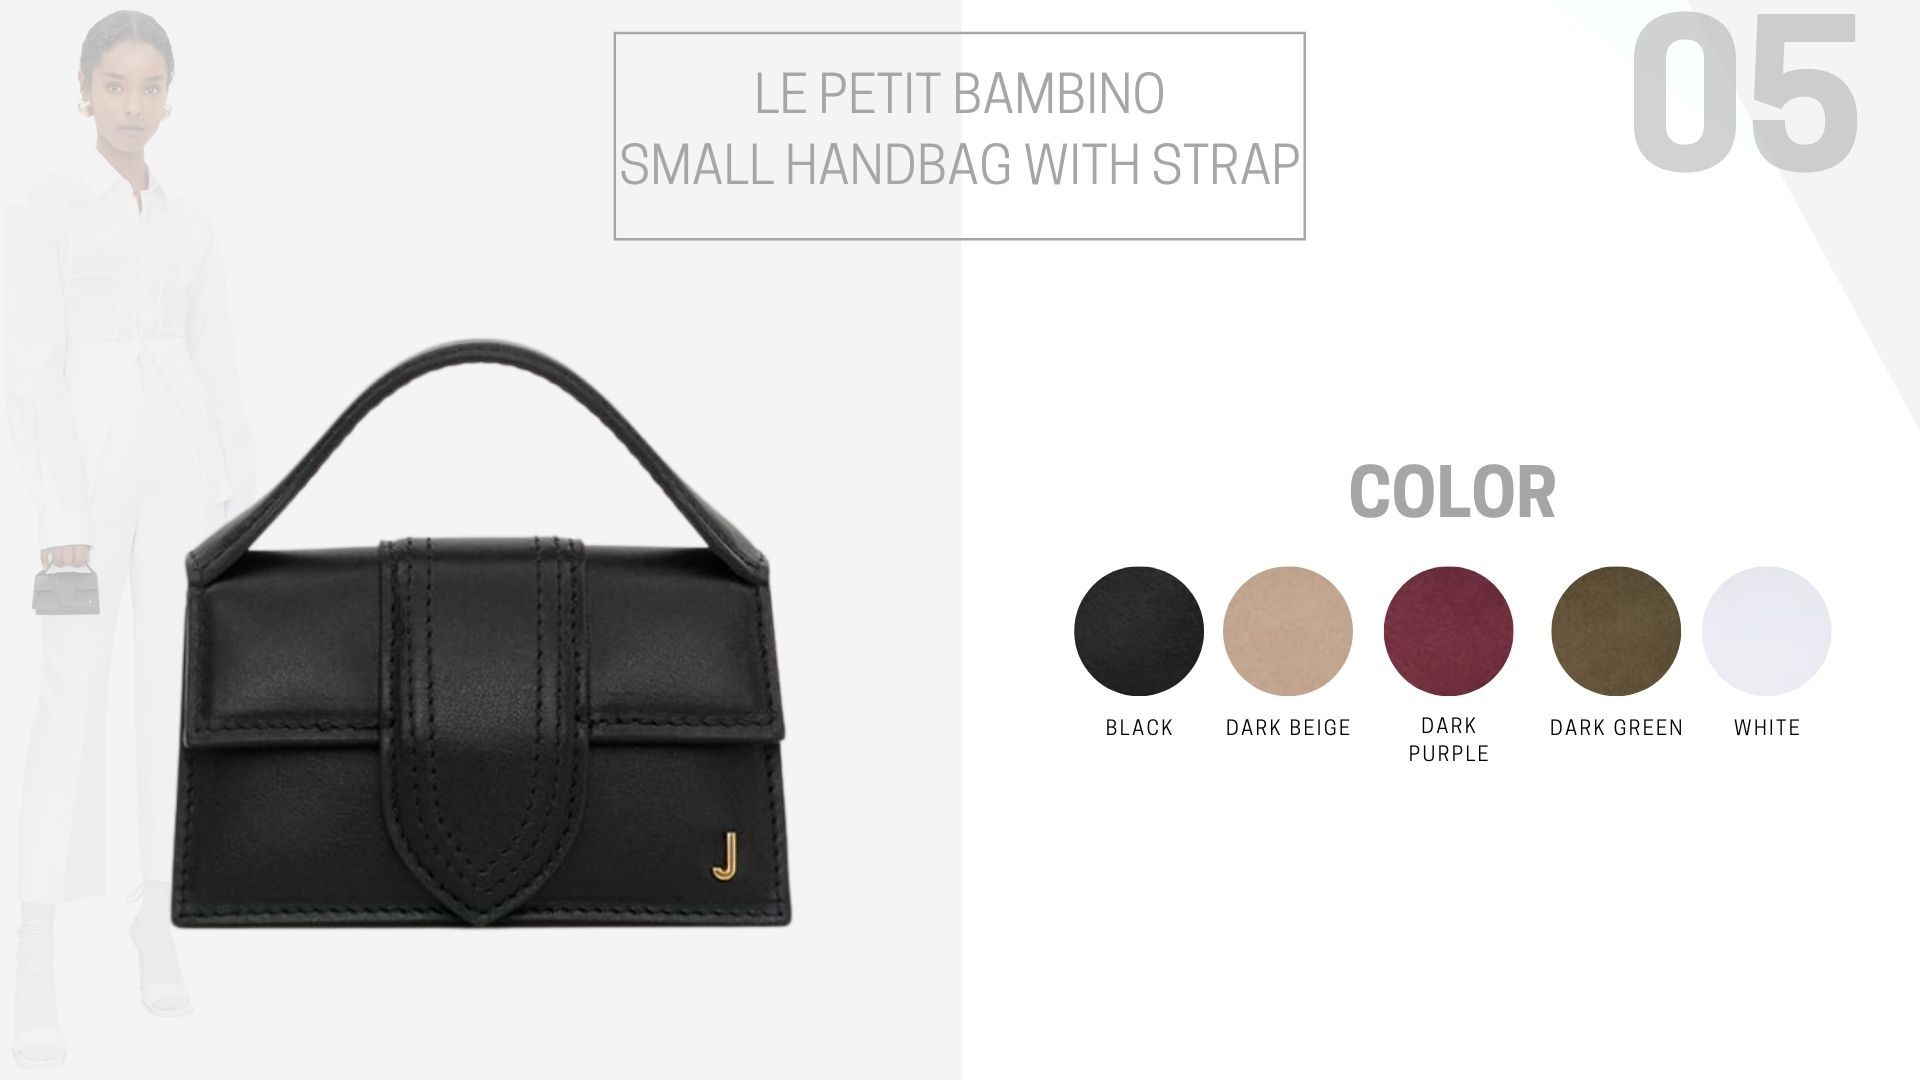 Le petit Bambino Small handbag with strap